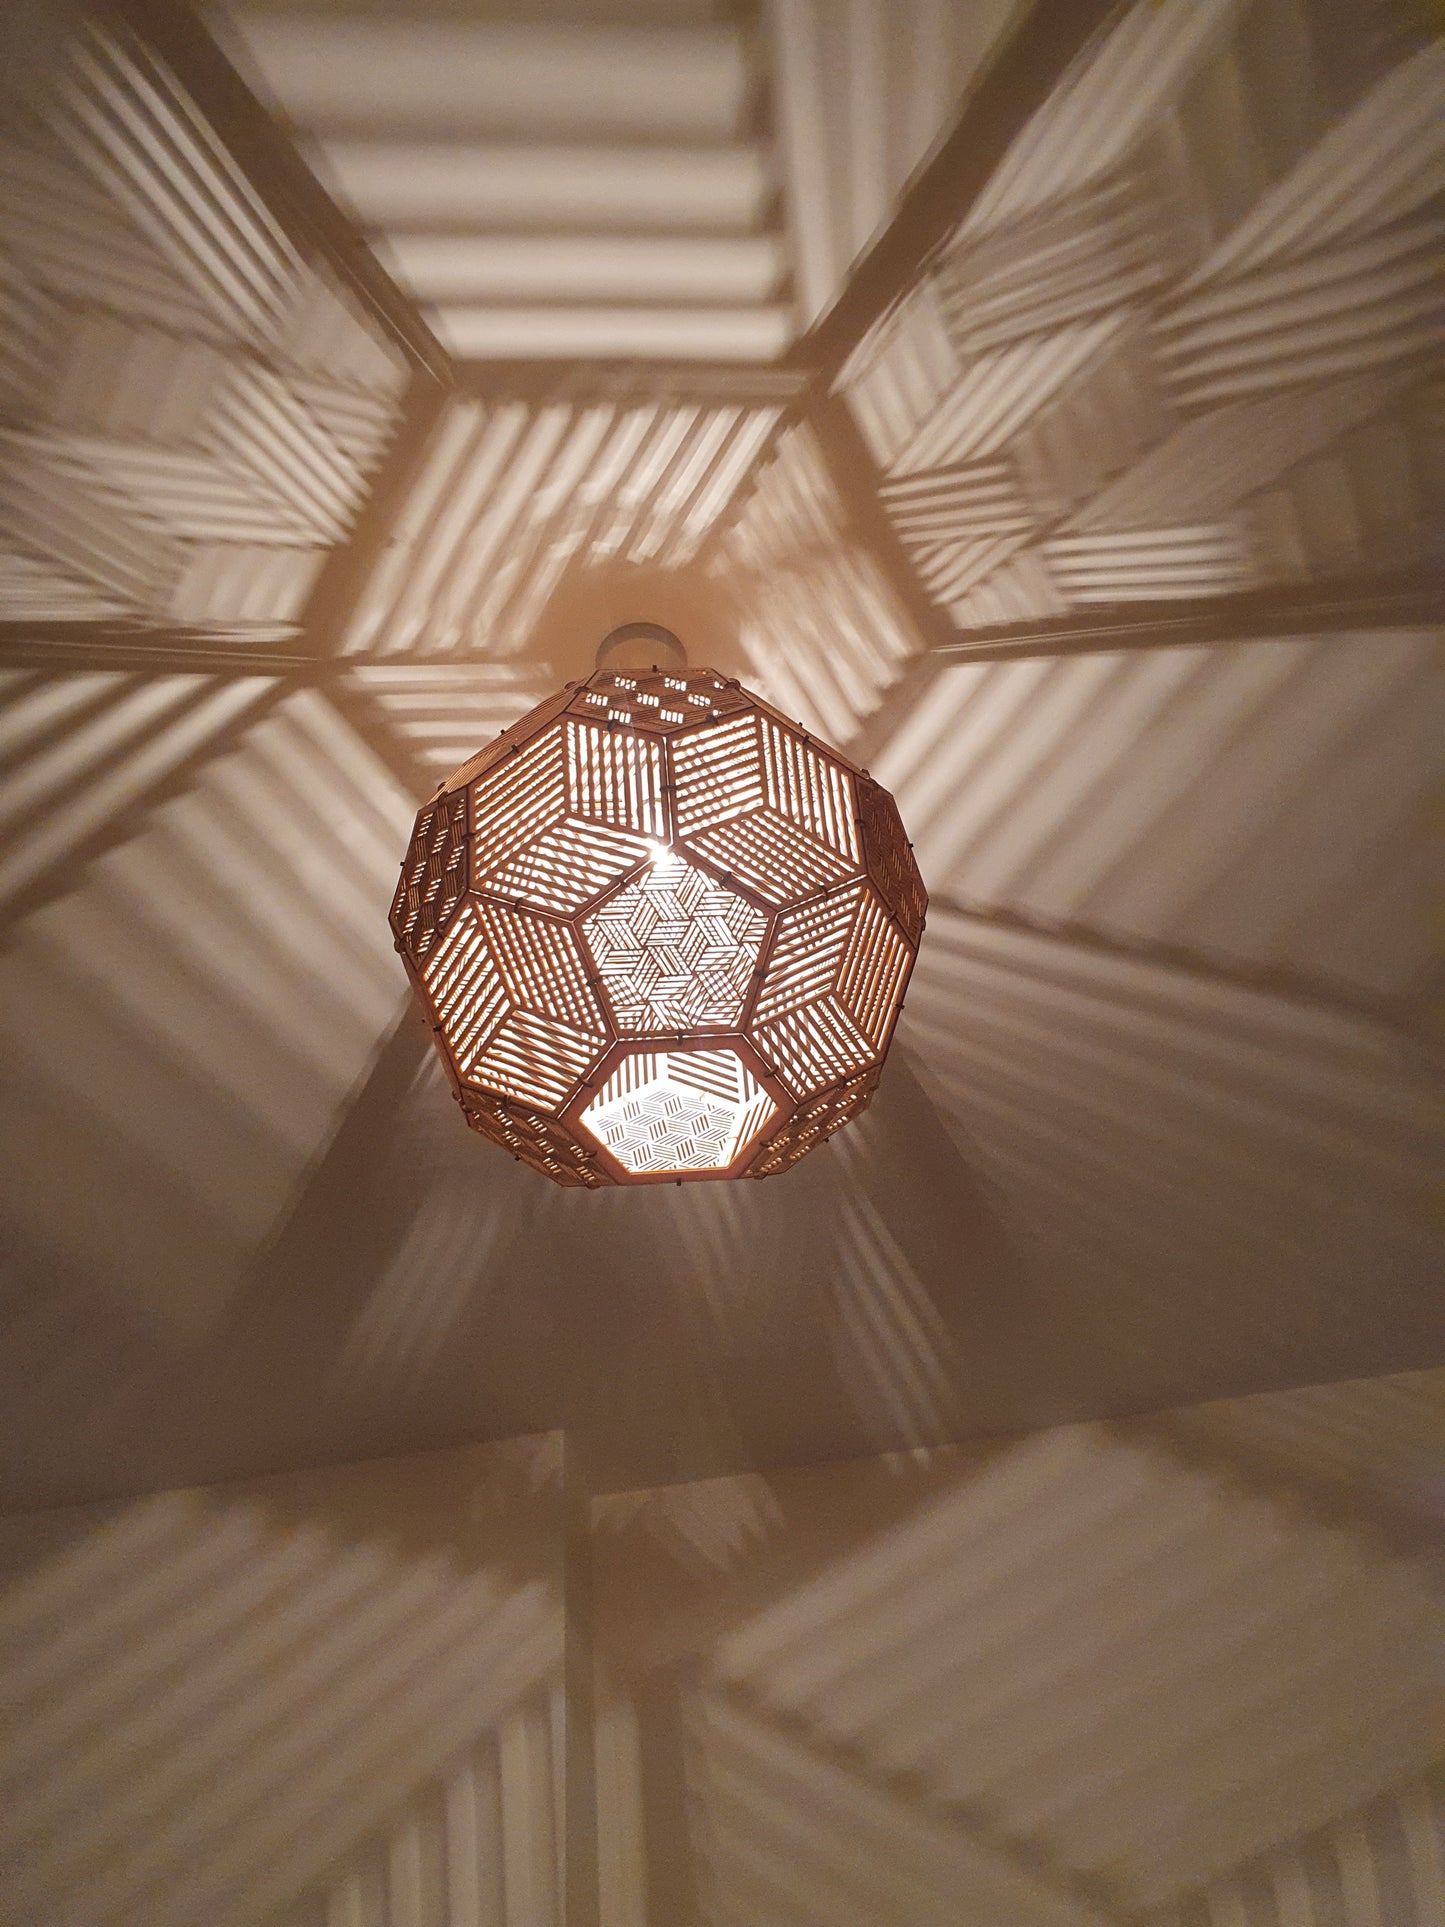 Bespoke wooden Prism light shade.